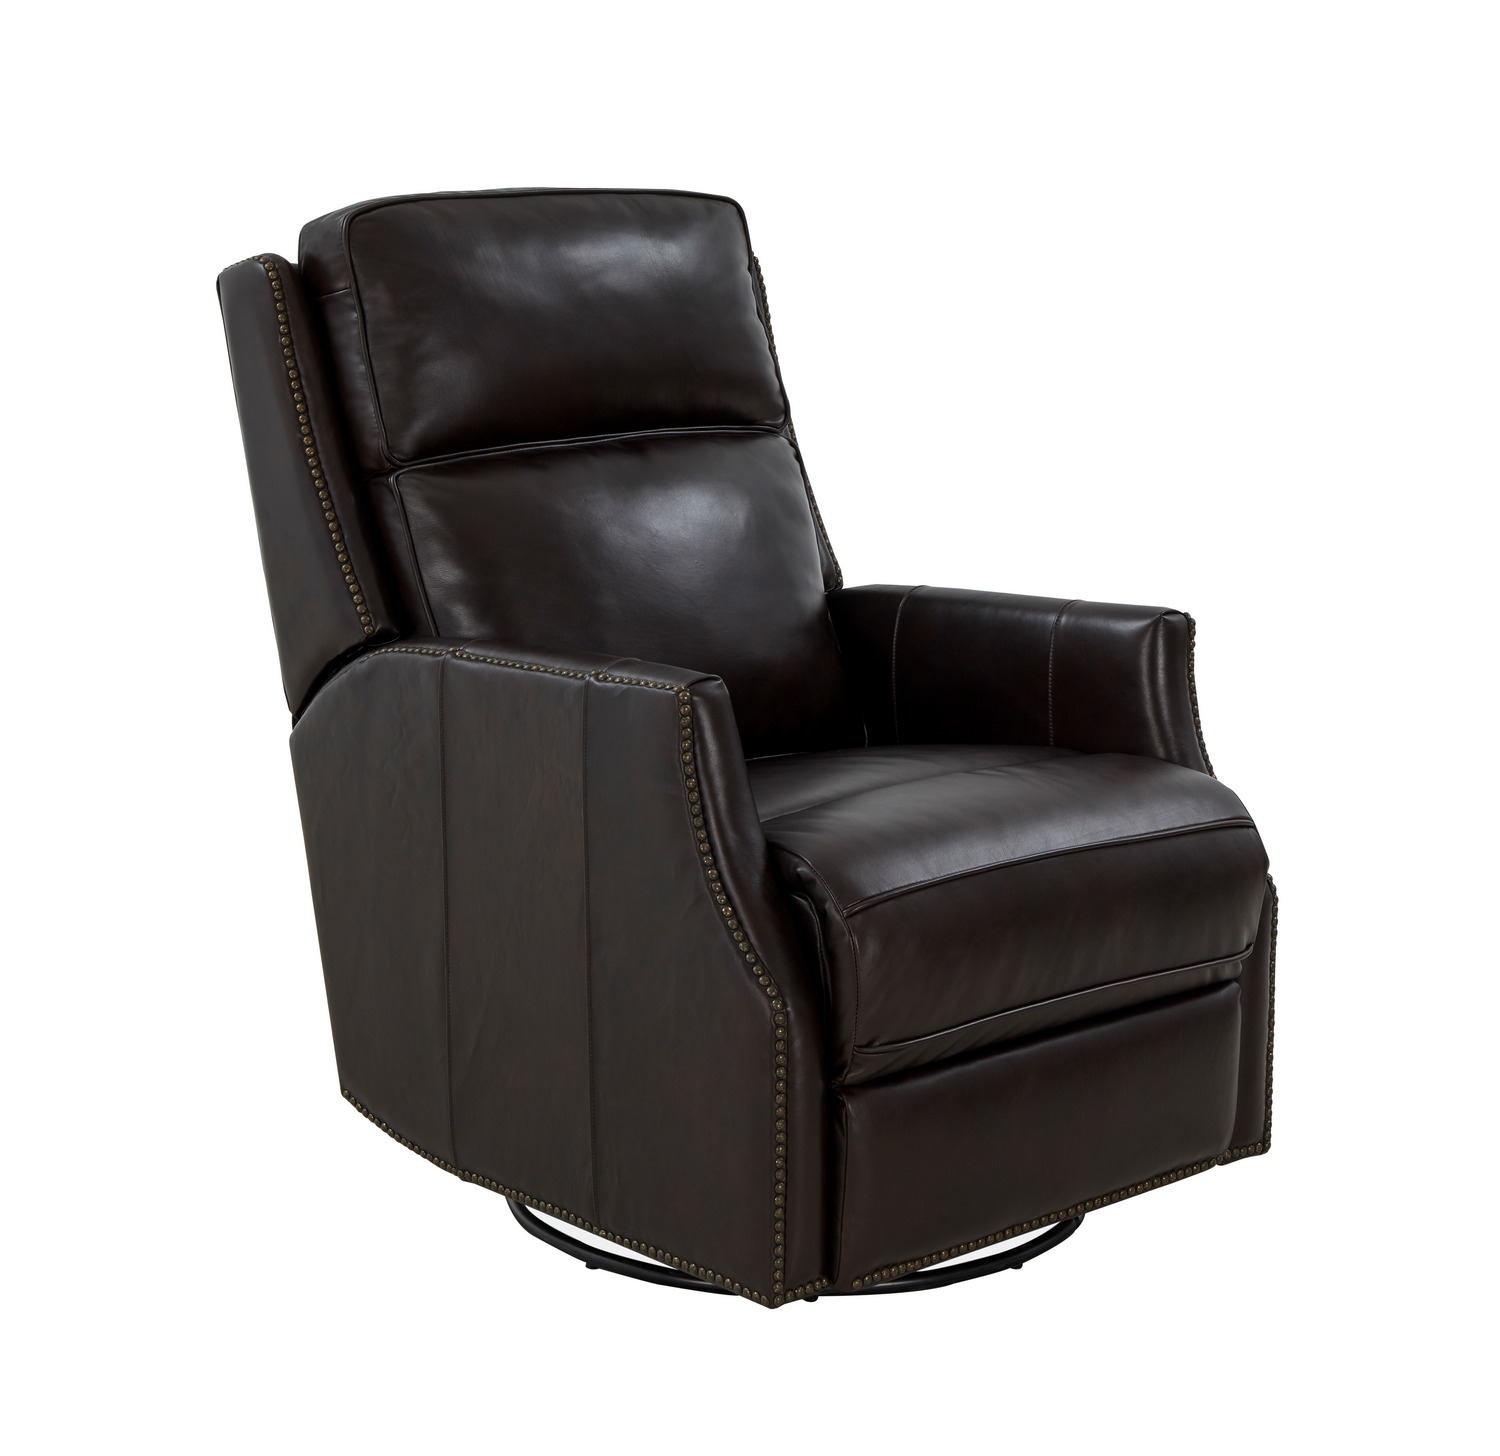 Barcalounger Aniston Power Swivel Glider Recliner Chair with Power Head Rest - Bennington Fudge/All Leather